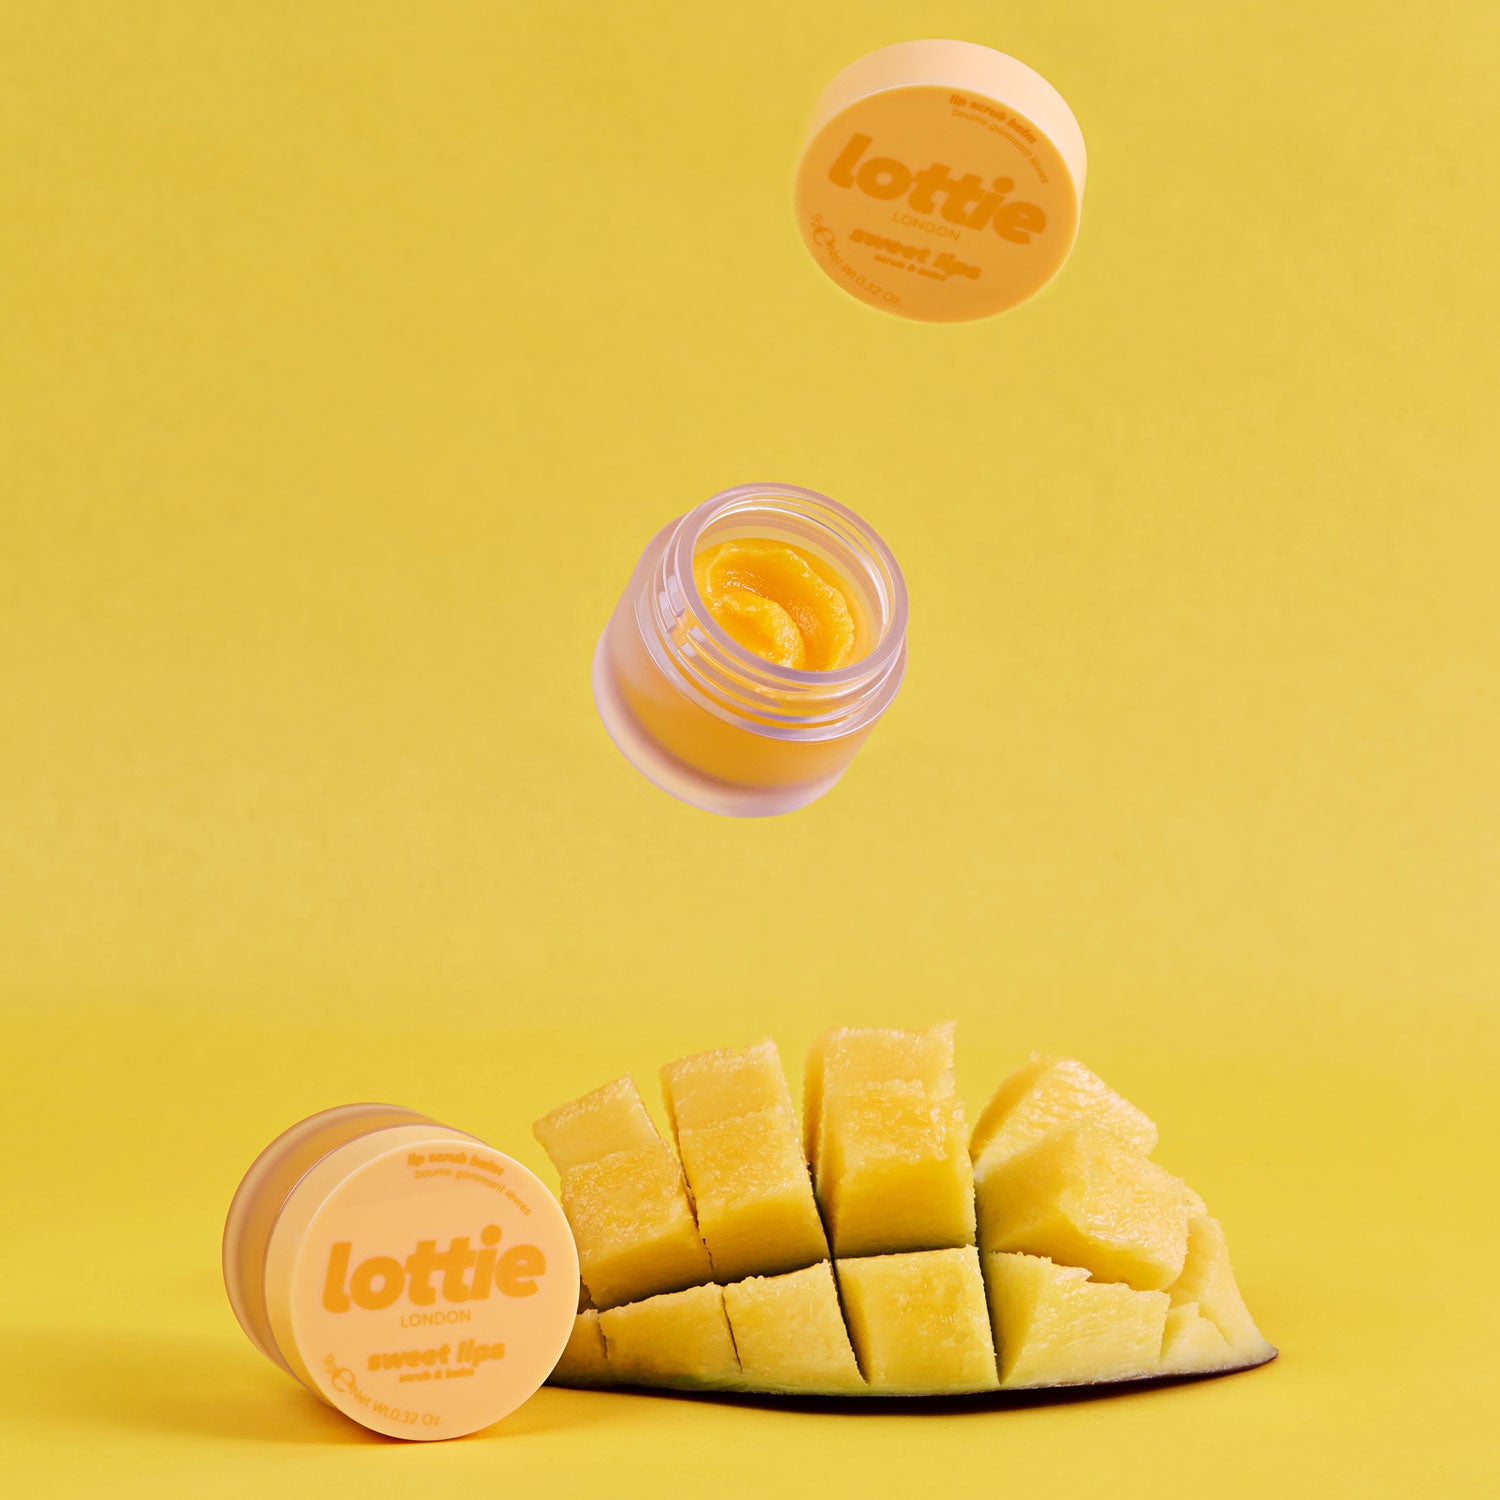 mango sorbet sweet lips scrub & balm